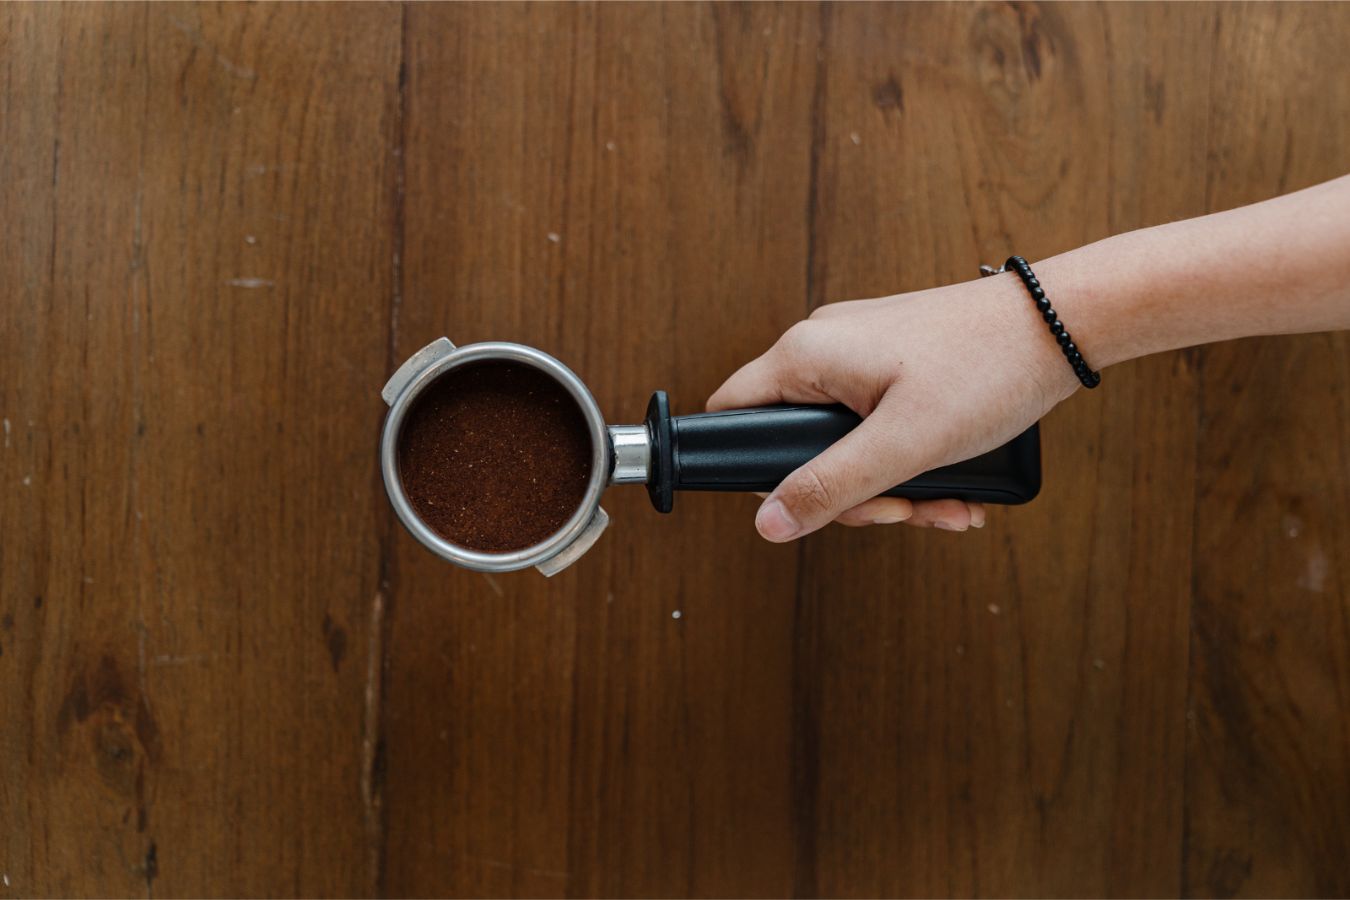 Tamping – Manipulating coffee when making Espresso